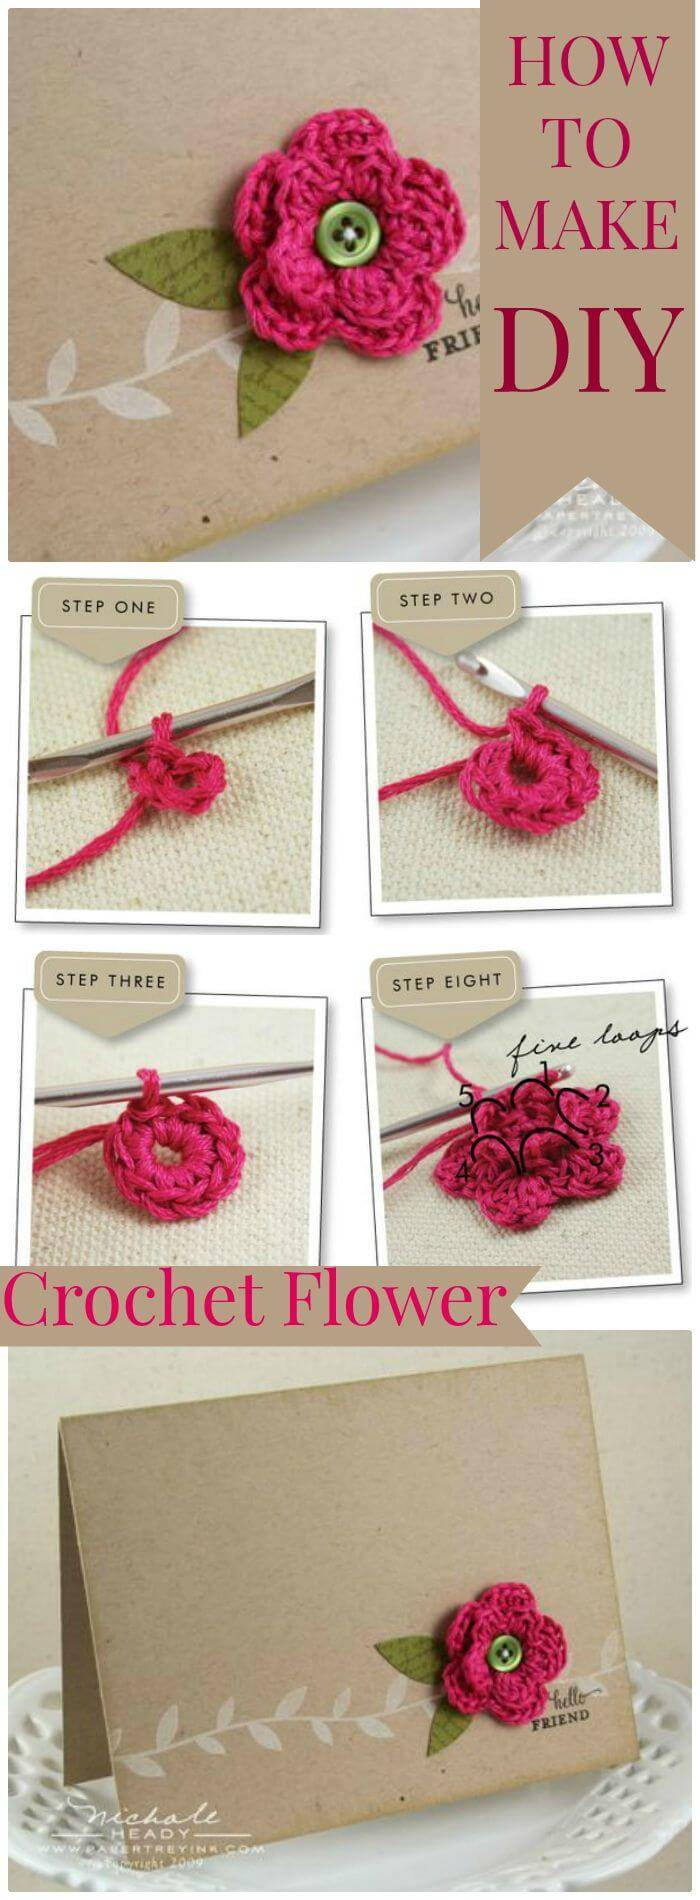 DIY Make A Crochet Flower As Decoration Piece, Free crochet flower patterns for crochet lovers!